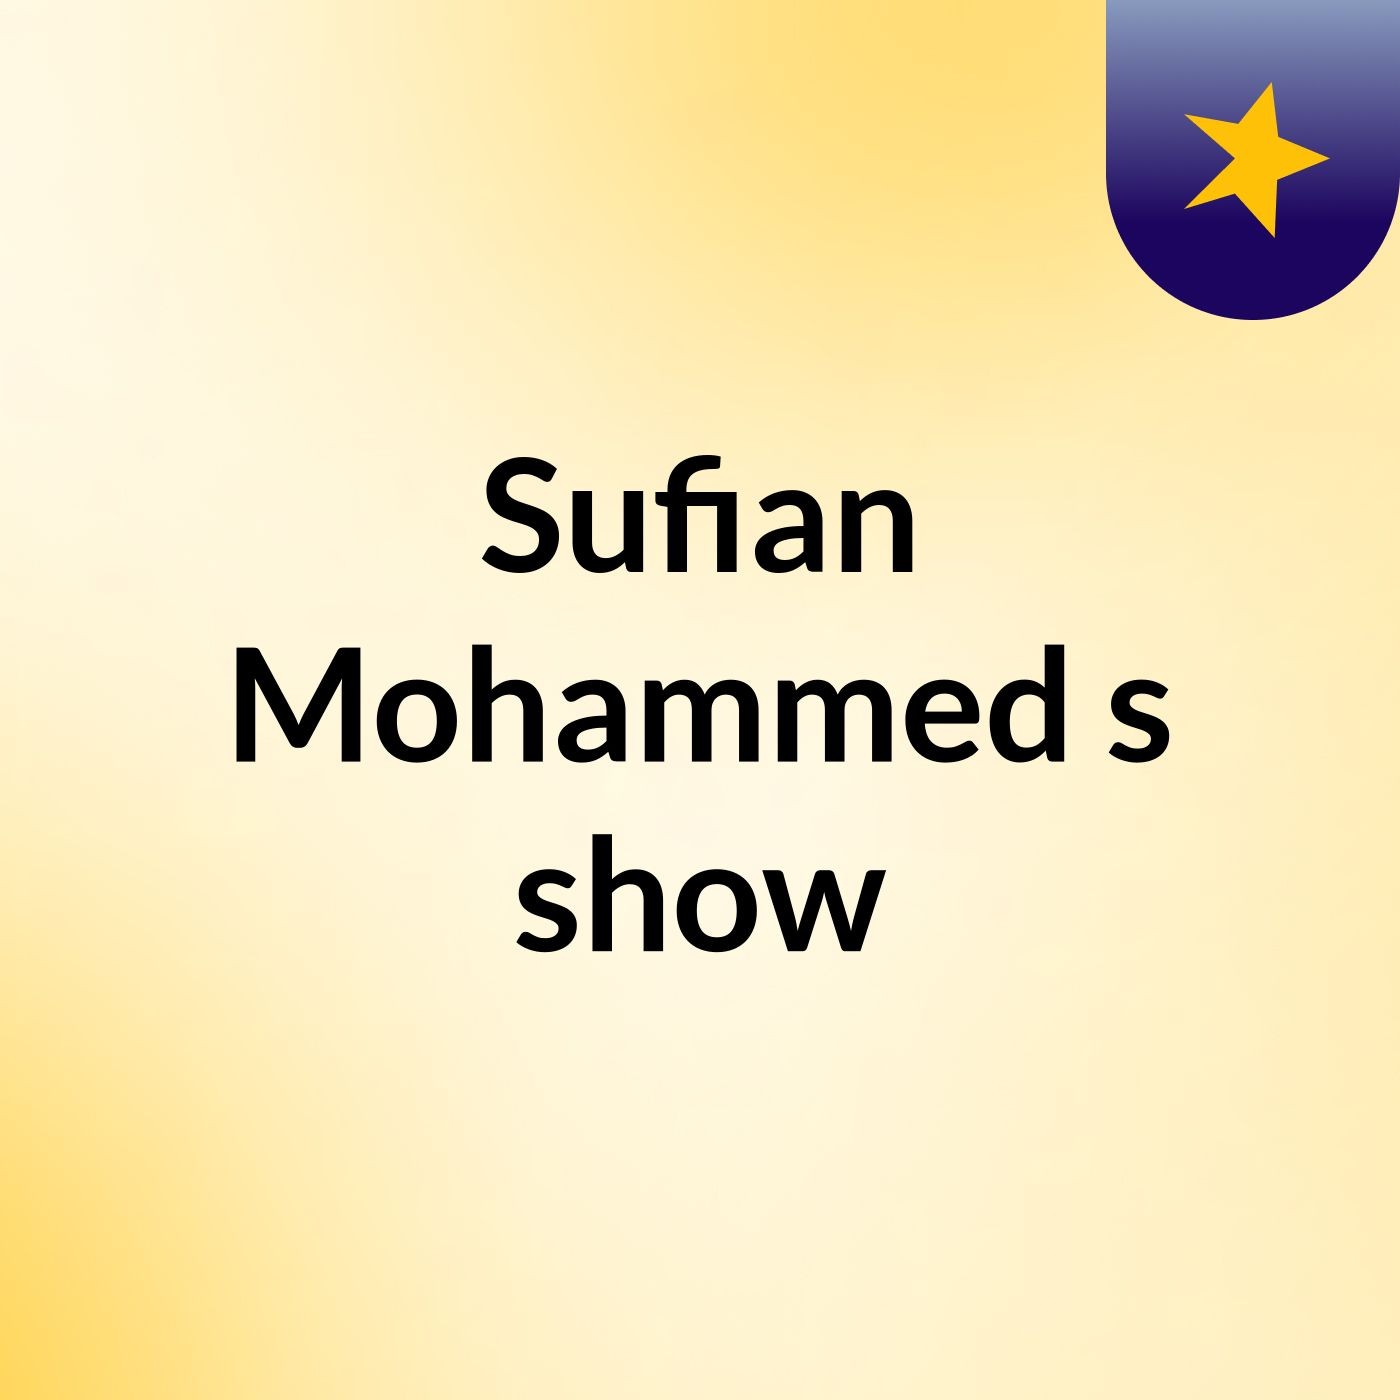 Sufian Mohammed's show